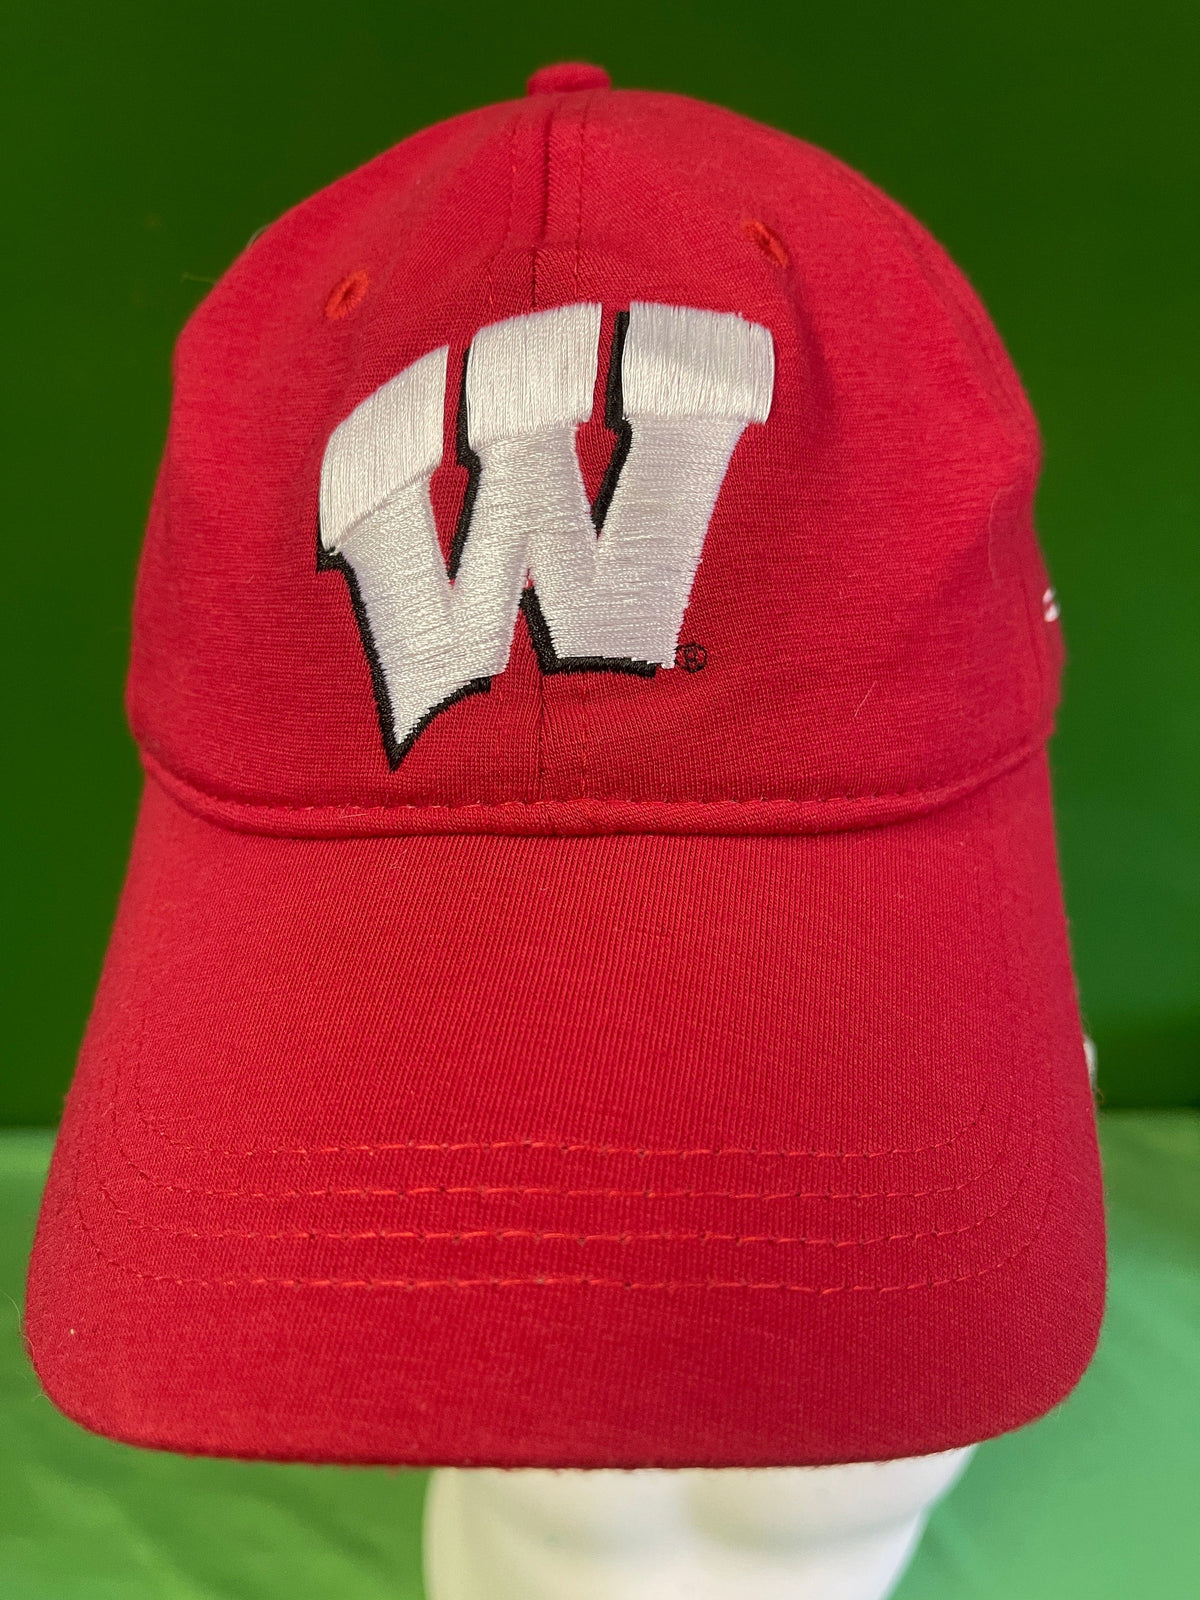 NCAA Wisconsin Badgers Under Armour Strapback Hat/Cap OSFM